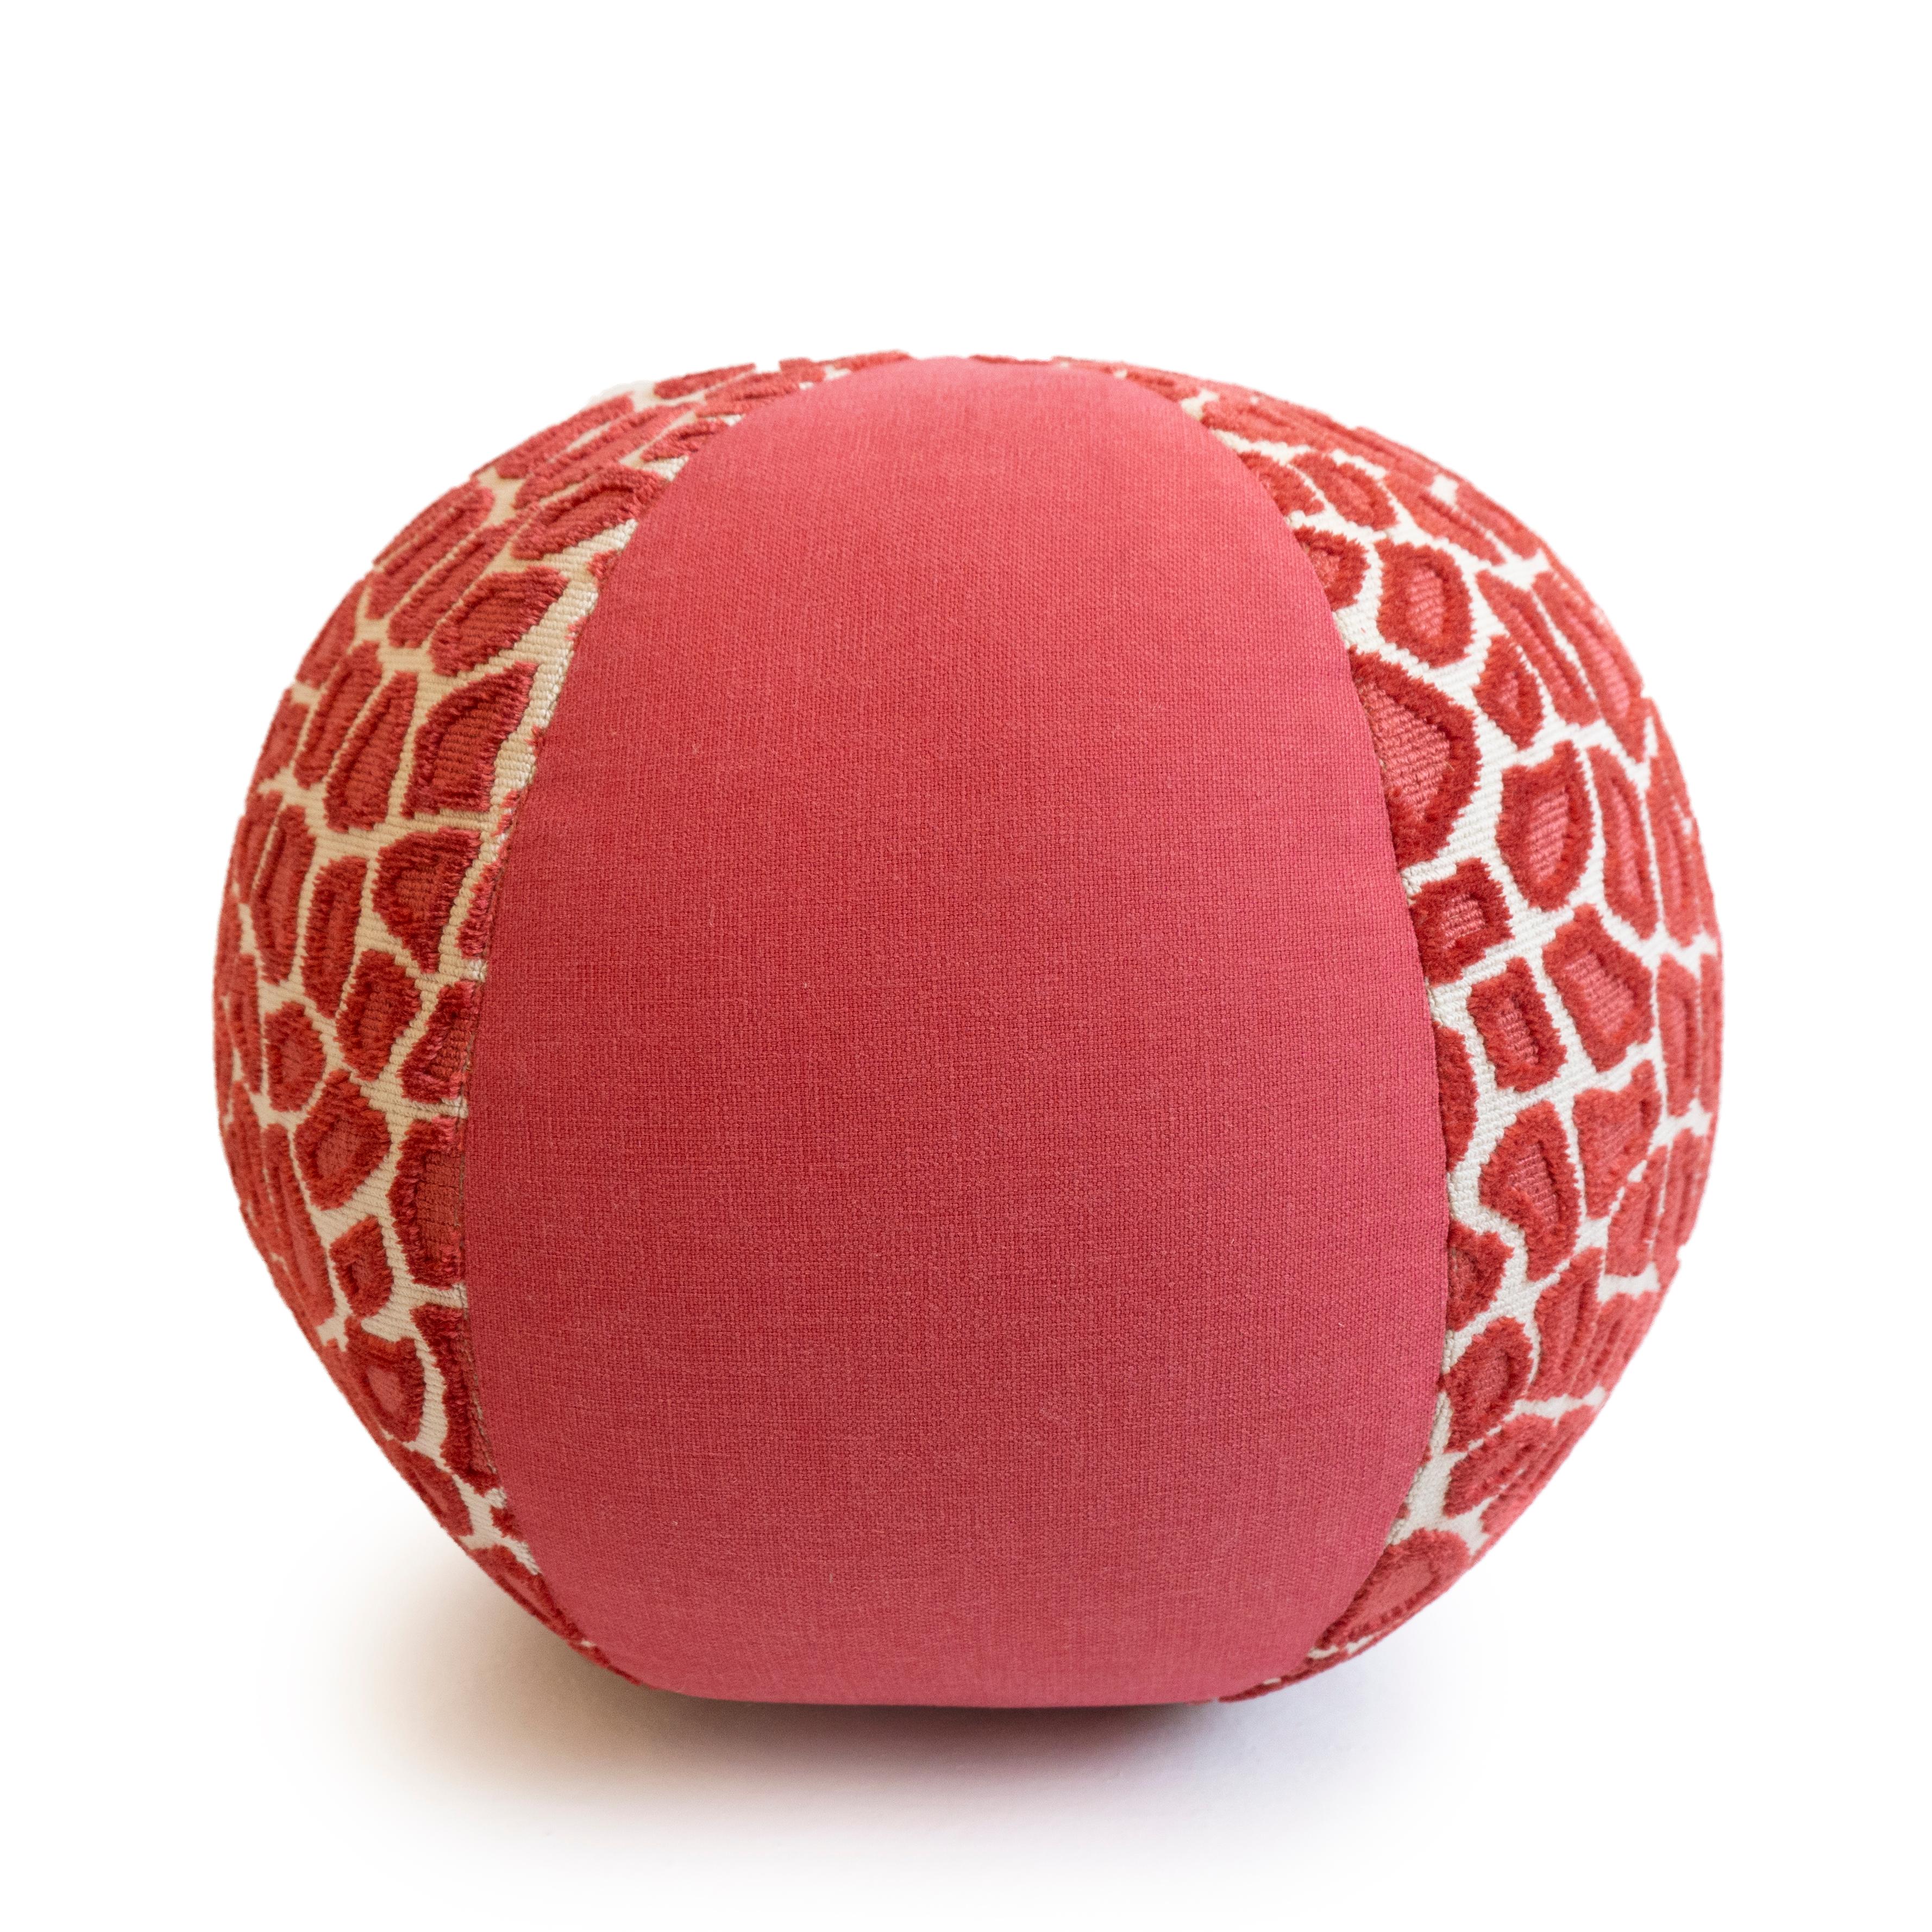 American Round Ball Throw Pillow in Leopard Print Cut Velvet